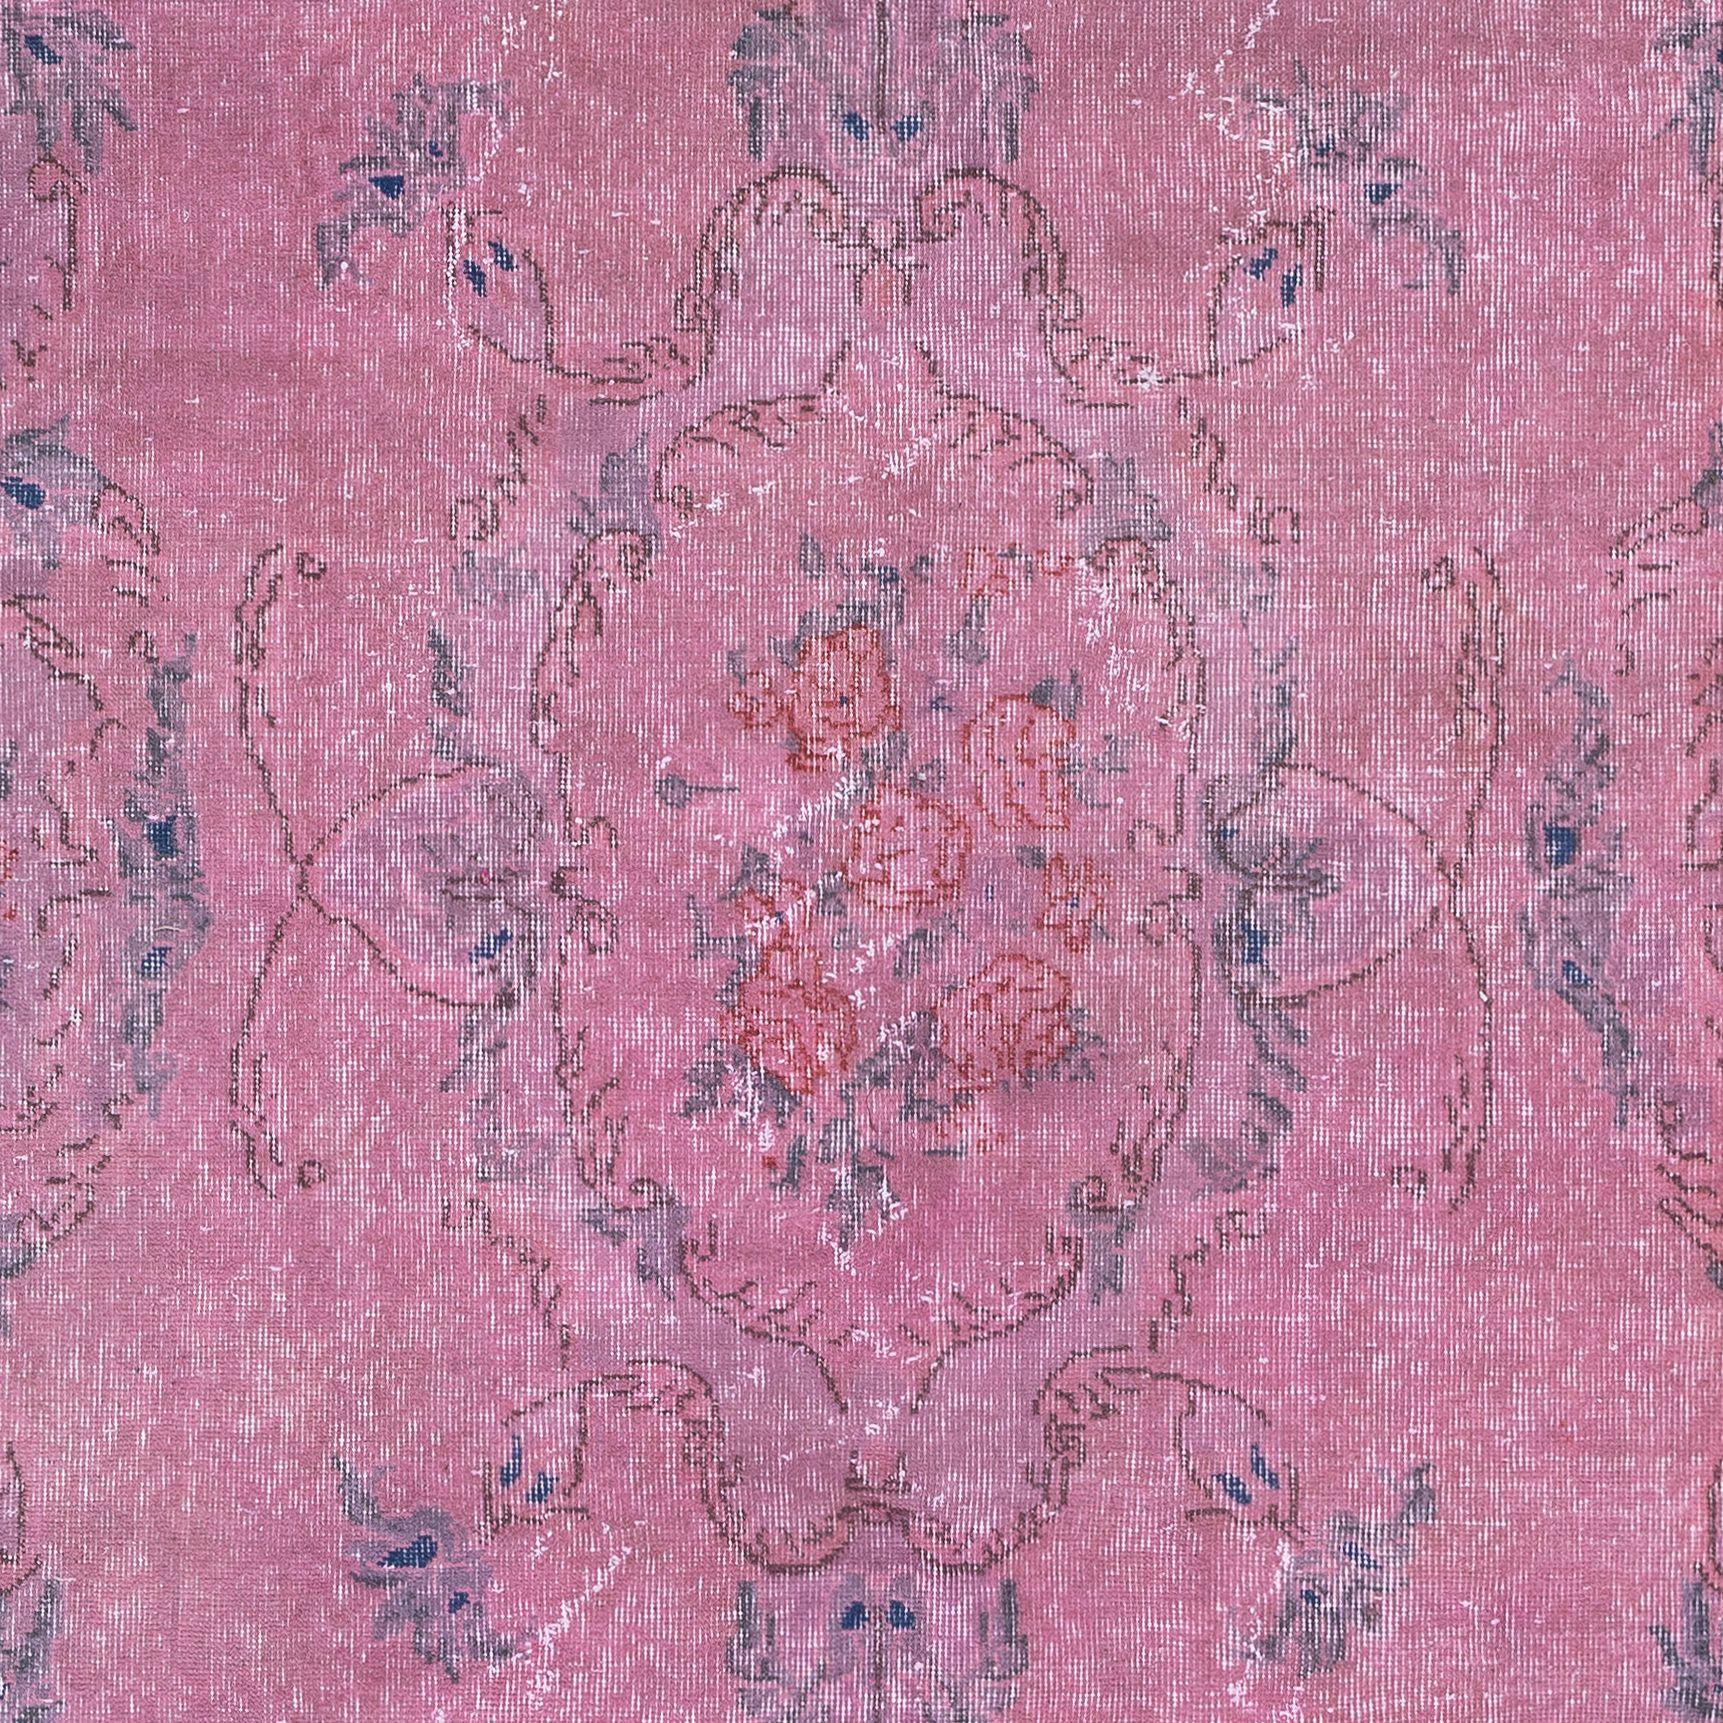 5.4x8.8 Ft Contemporary Handmade Turkish Floral Pattern Area Rug in Soft Pink (Moderne) im Angebot